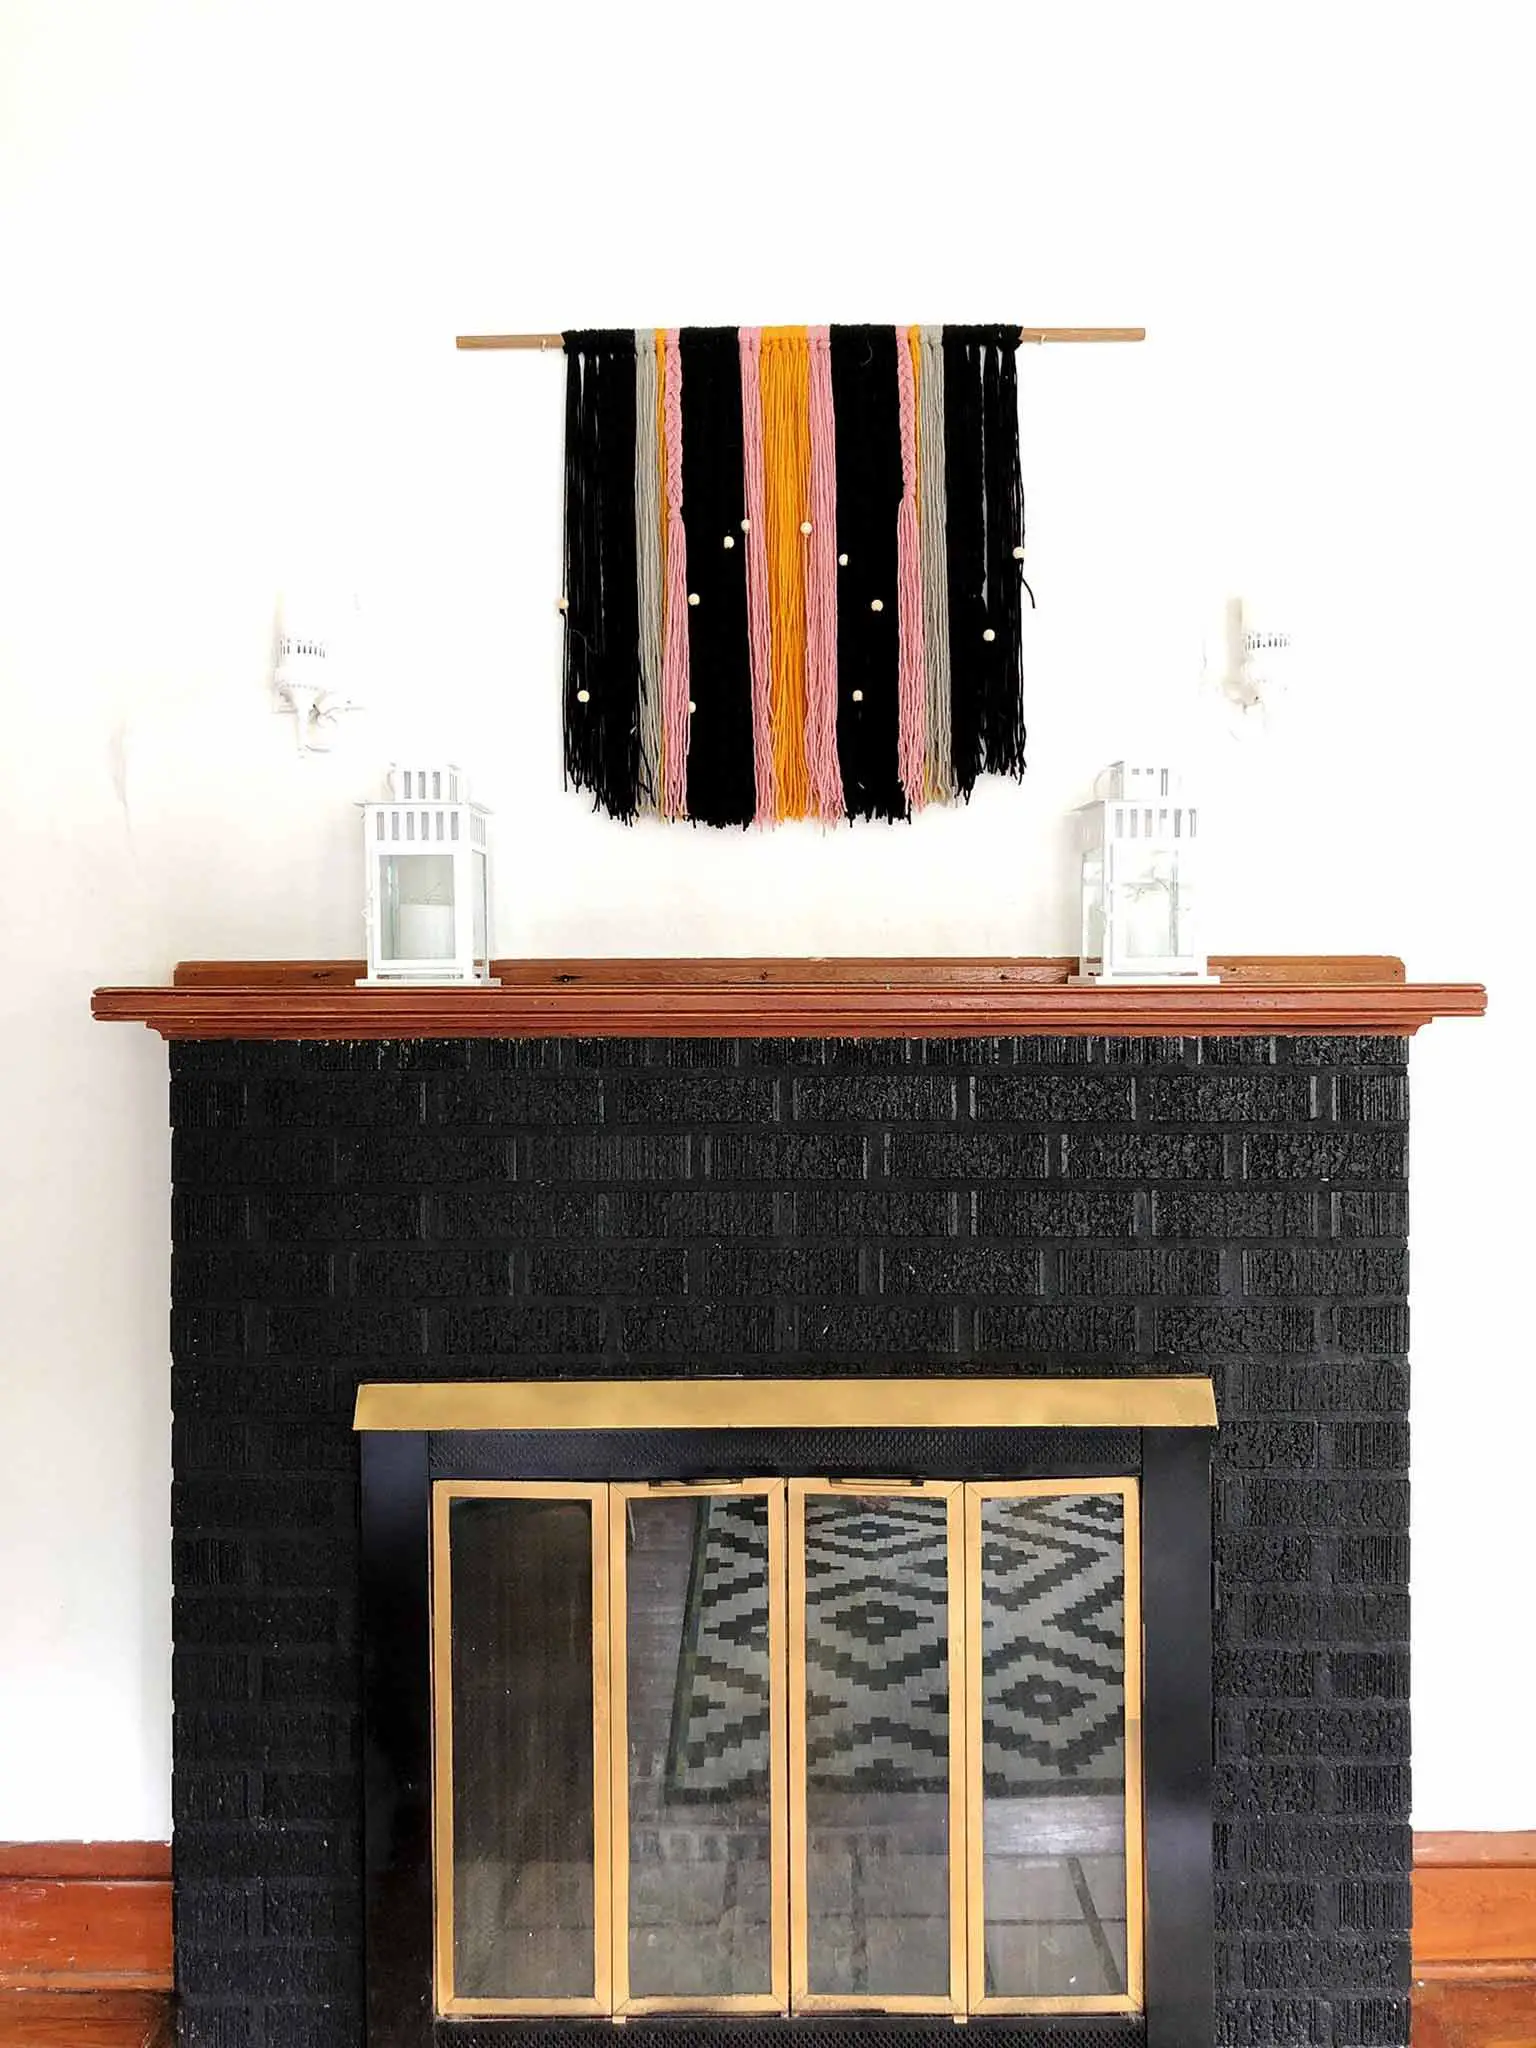 Yarn Wall hanging - Modern minimalist room makeover on a budget - That Homebird Life Blog